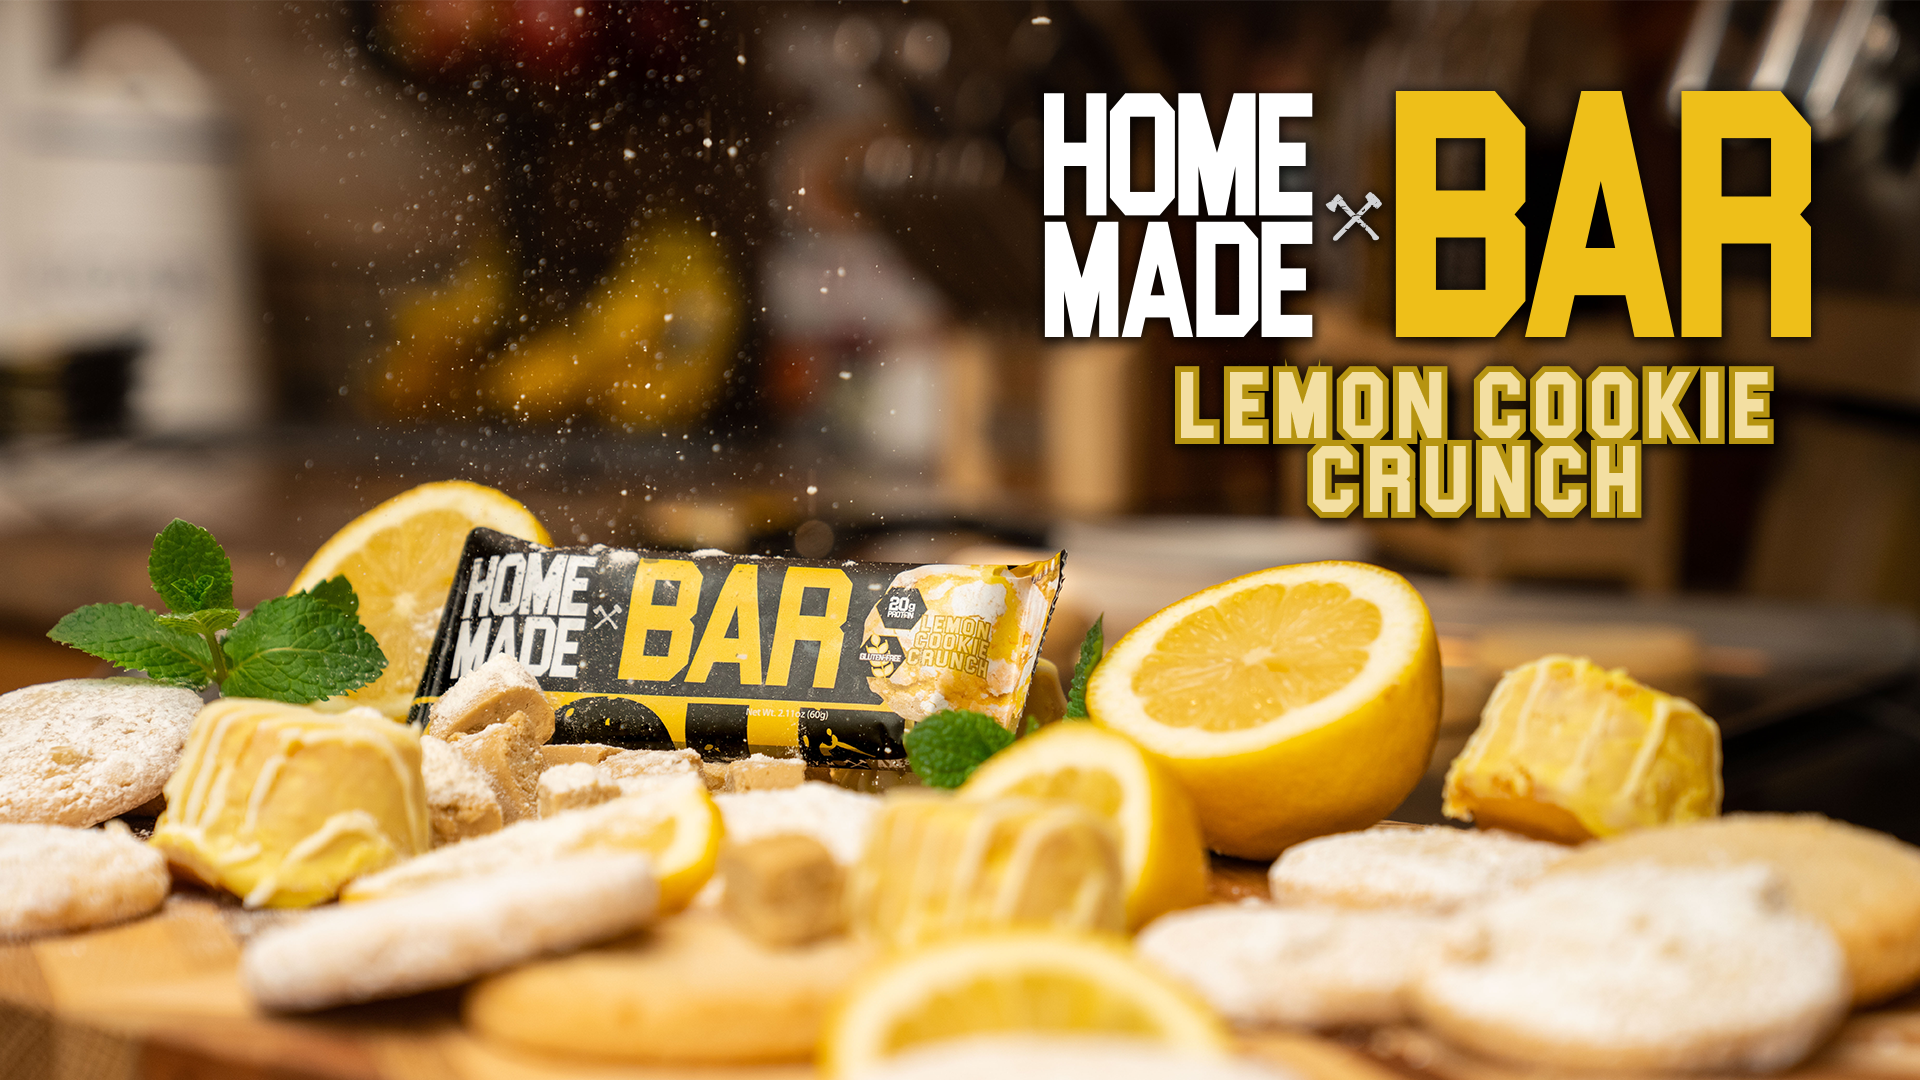 Home Made Bar Lemon Cookie Crunch: Where Citrus Meets Sweet